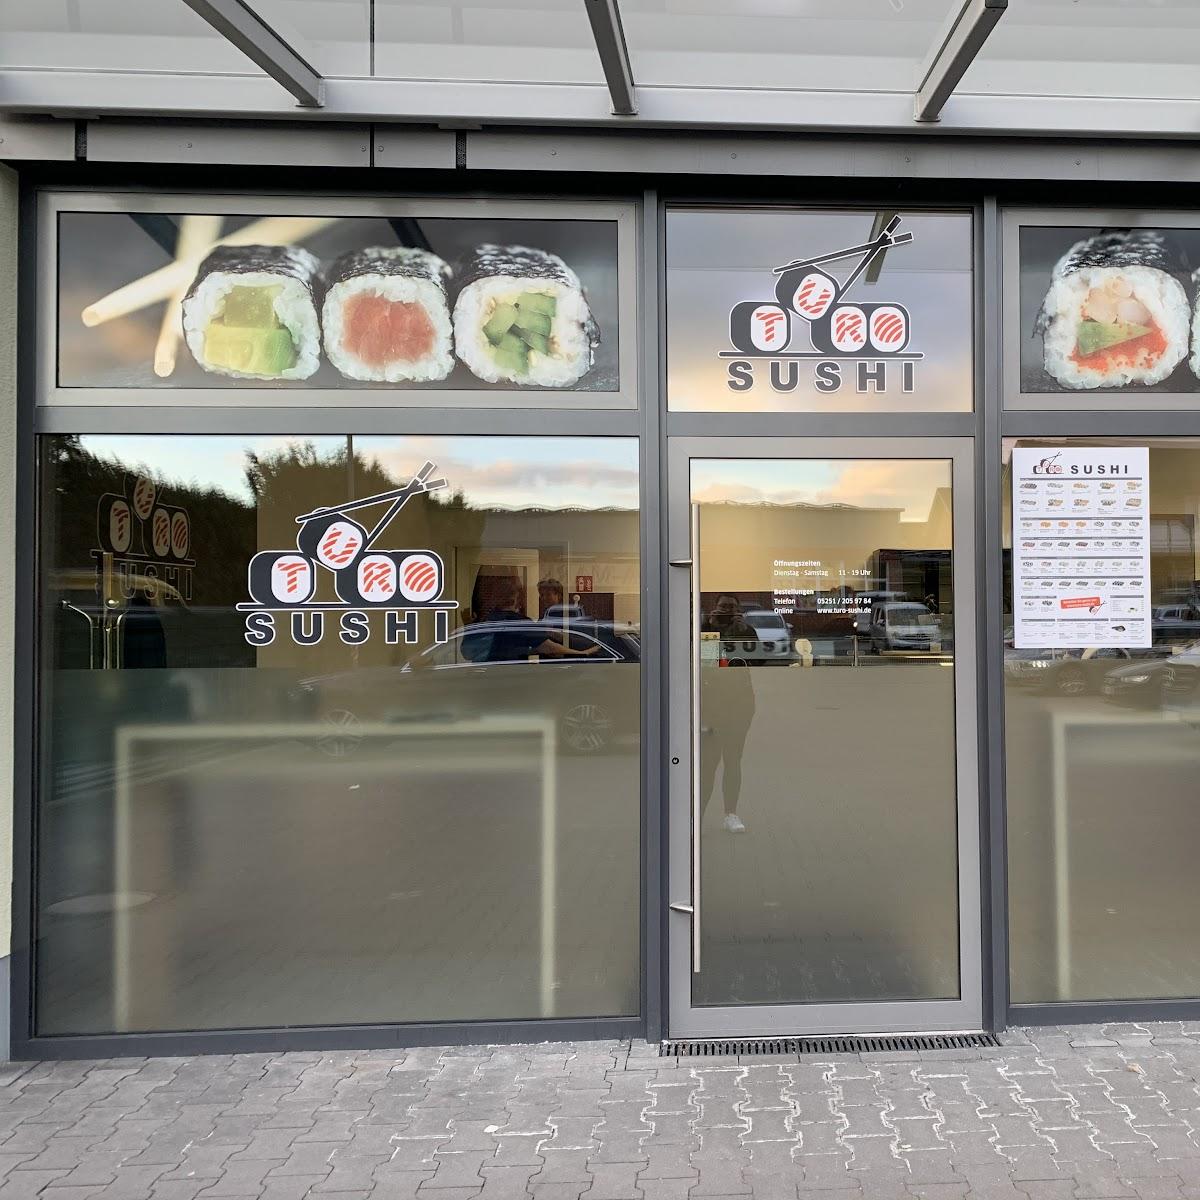 Restaurant "Turo Sushi - Sushi bestellen in  Stadtheide" in Paderborn